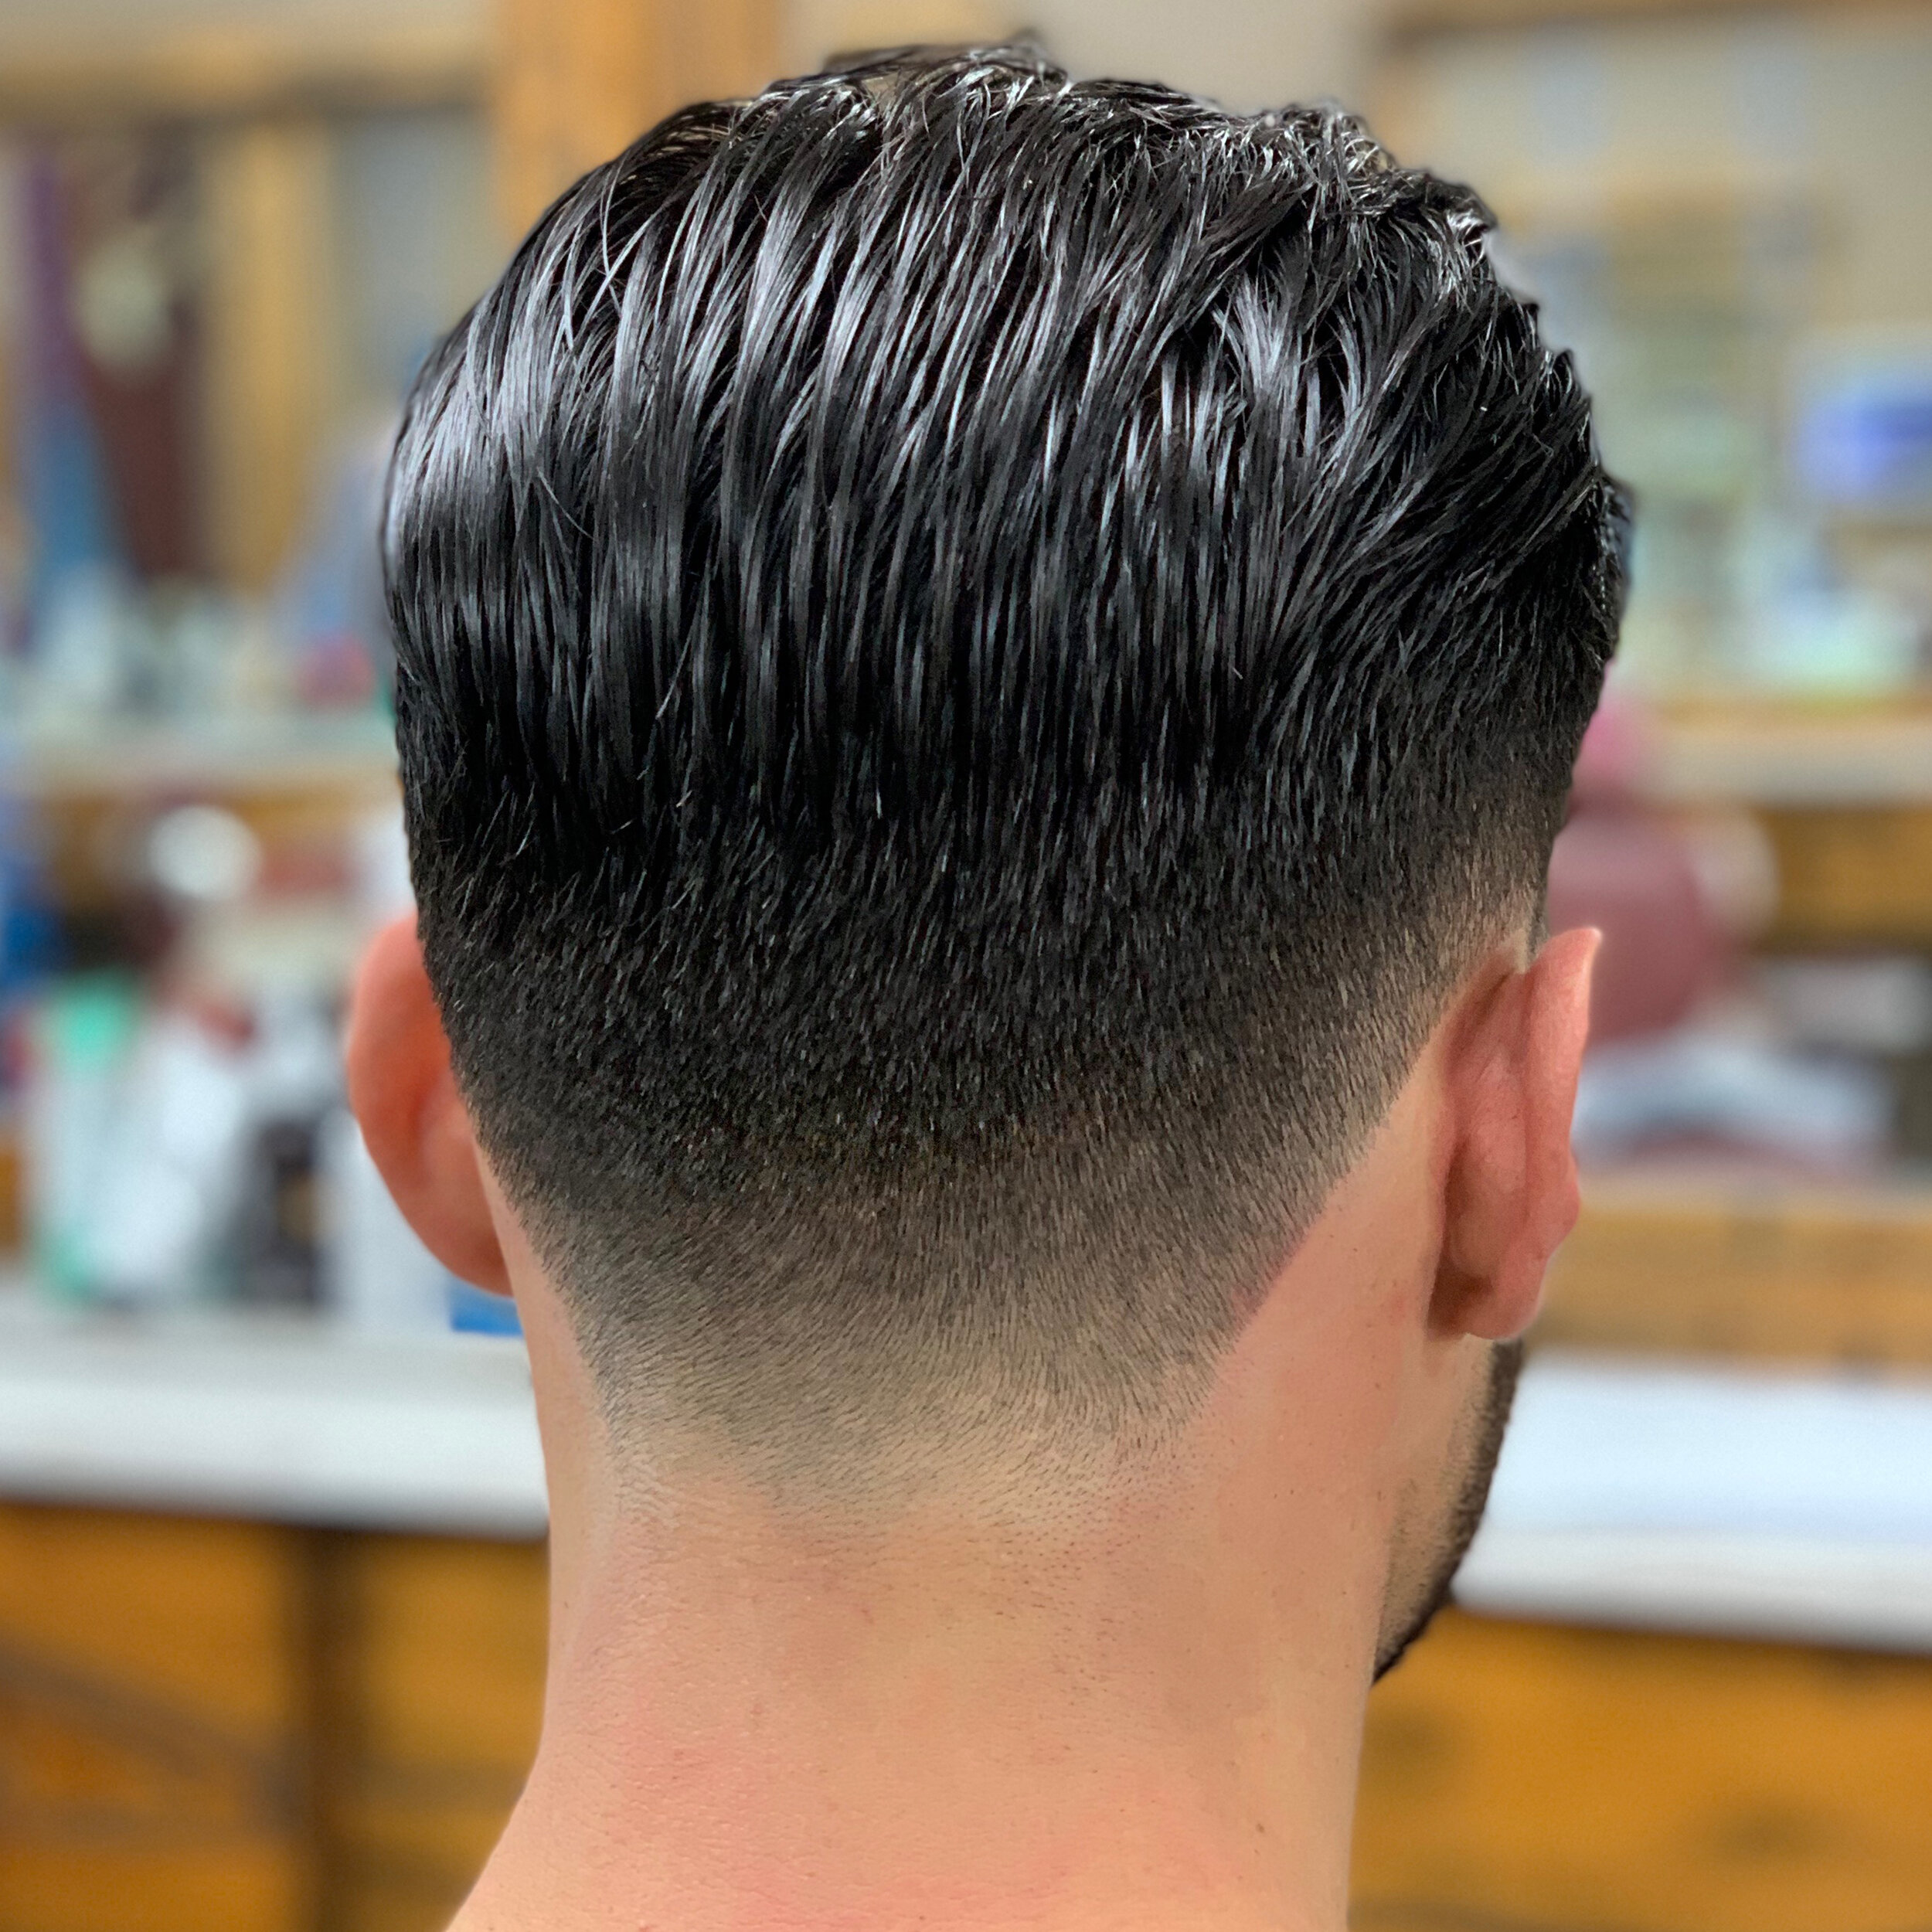 HAIRCUT PHOTOS — American Haircuts Barber & Shop